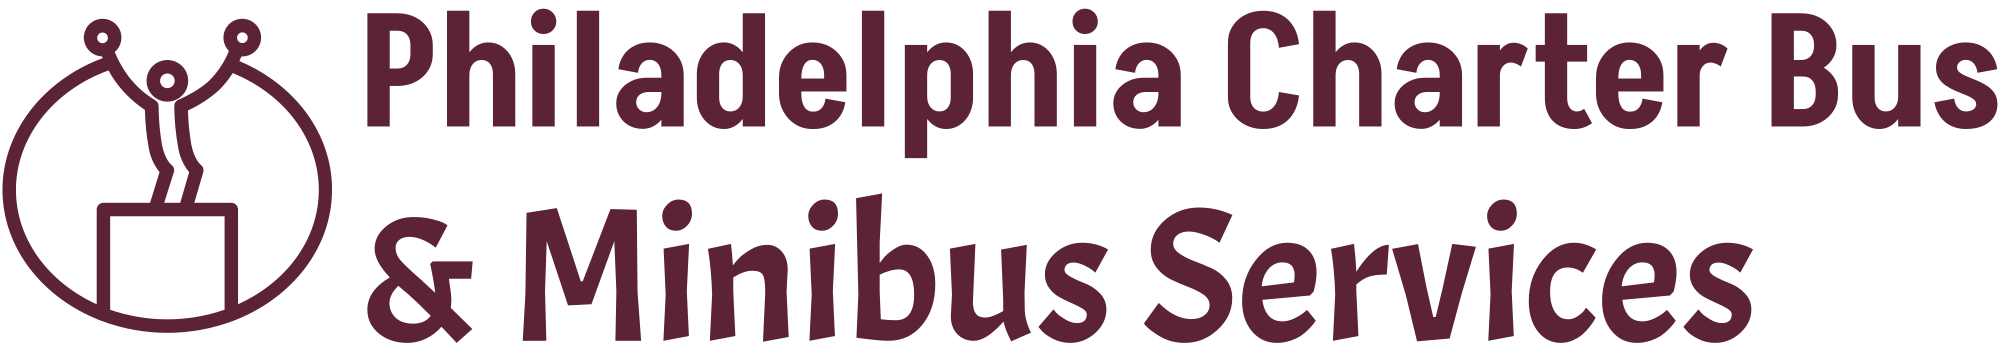 Charter Bus Company Philadelphia logo